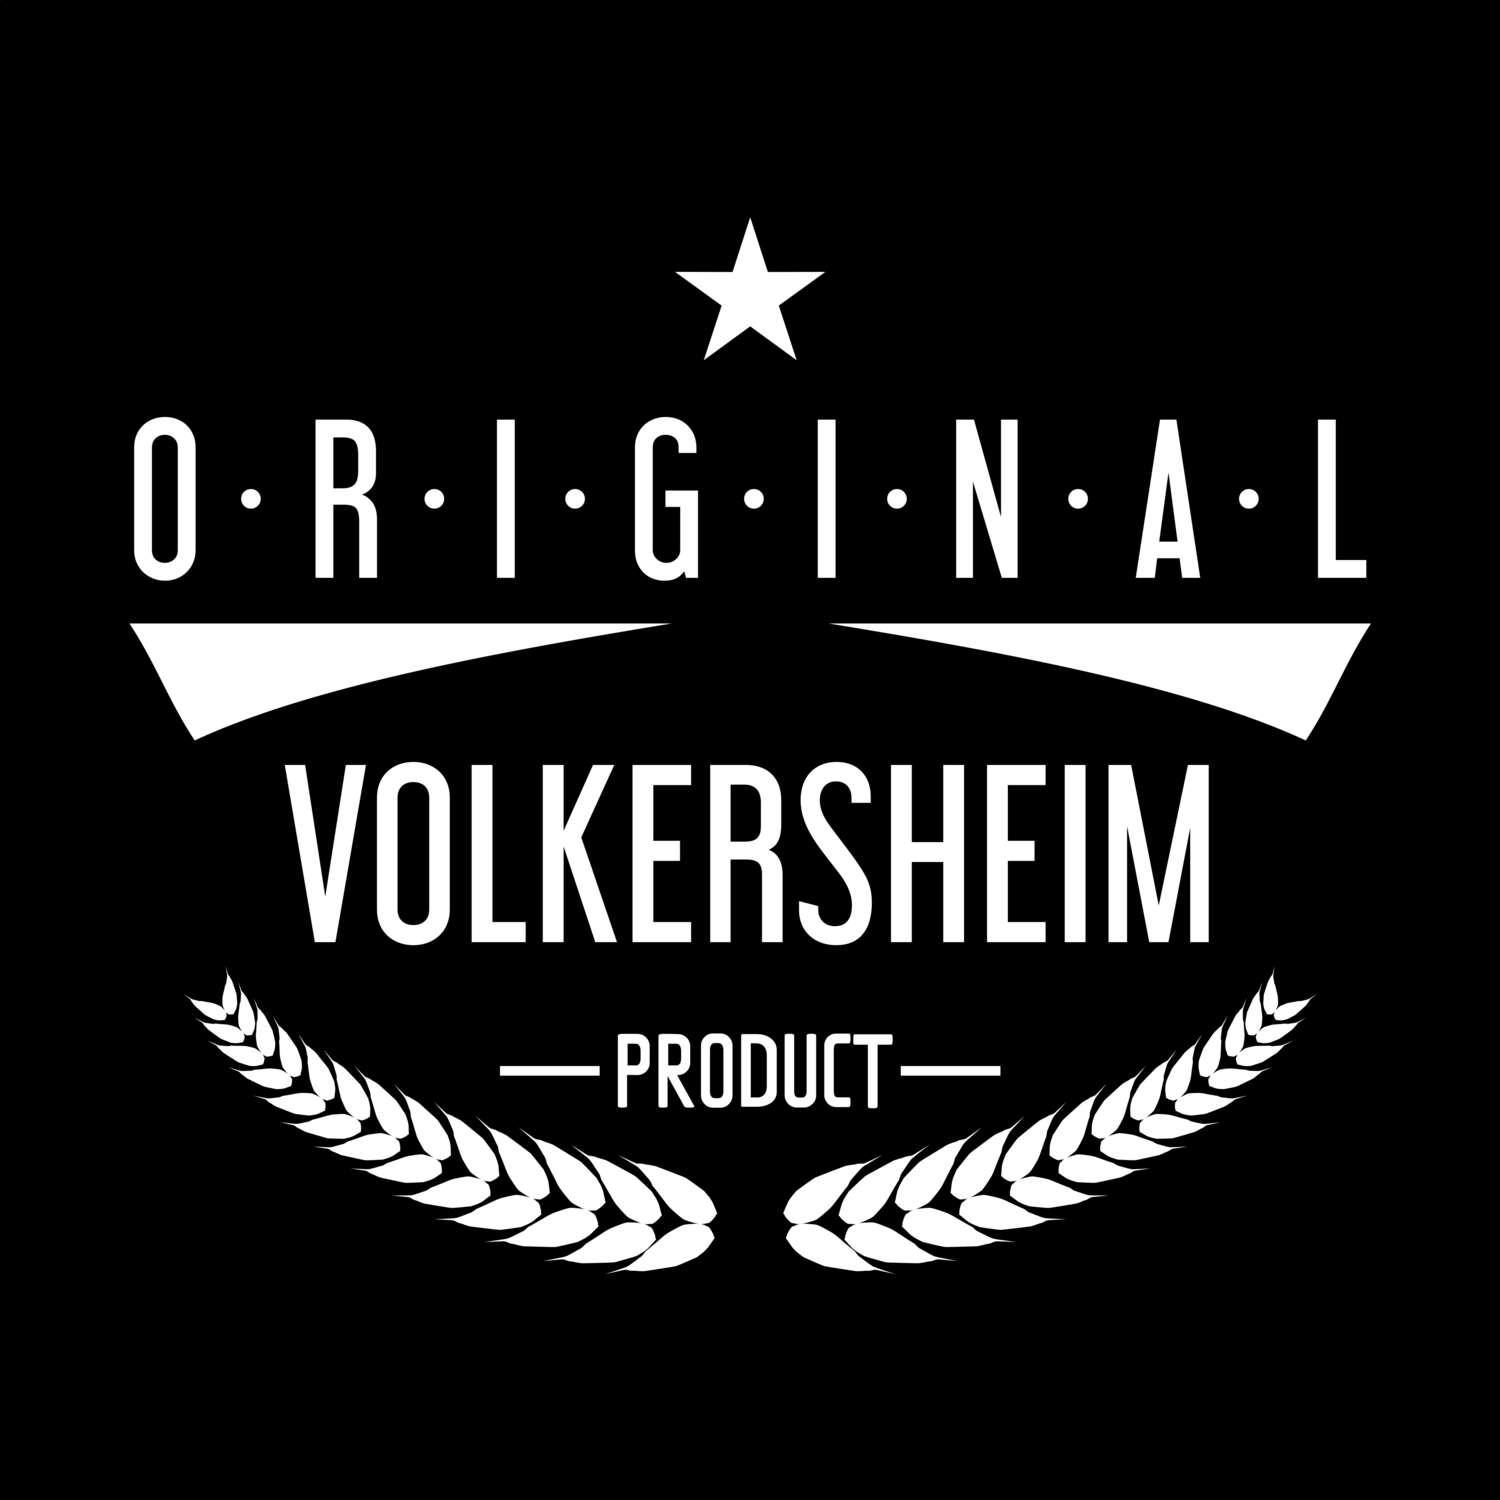 Volkersheim T-Shirt »Original Product«